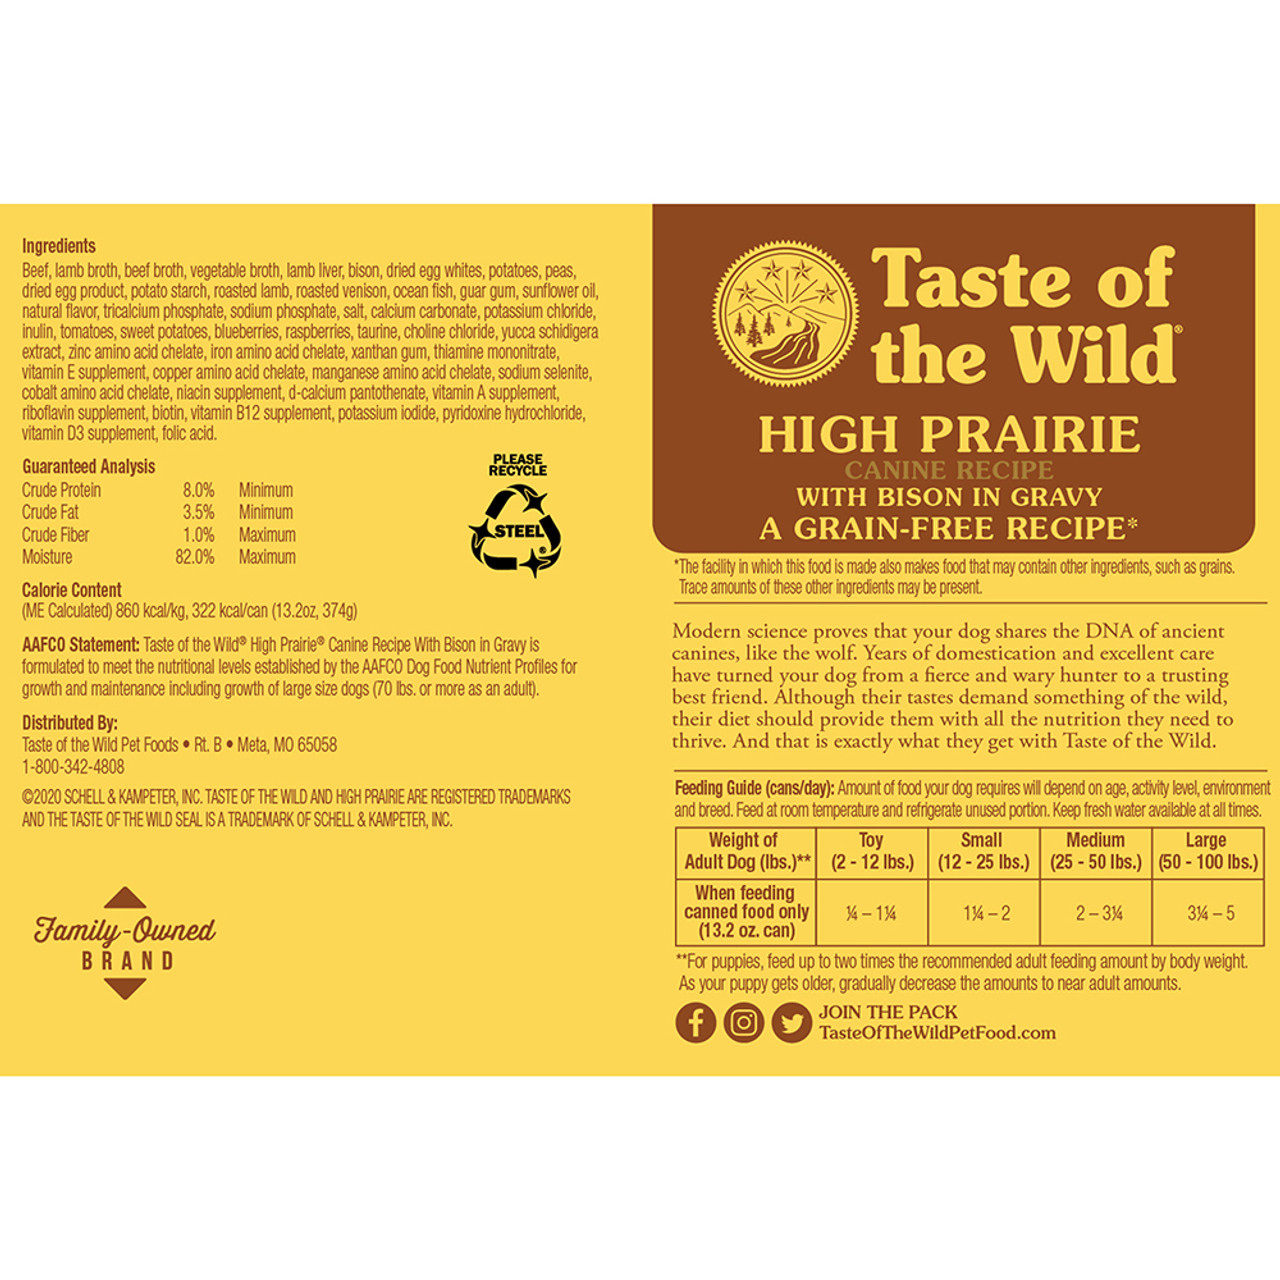  Taste of the Wild High Prairie Canine Formula Canned Dog Food - Back